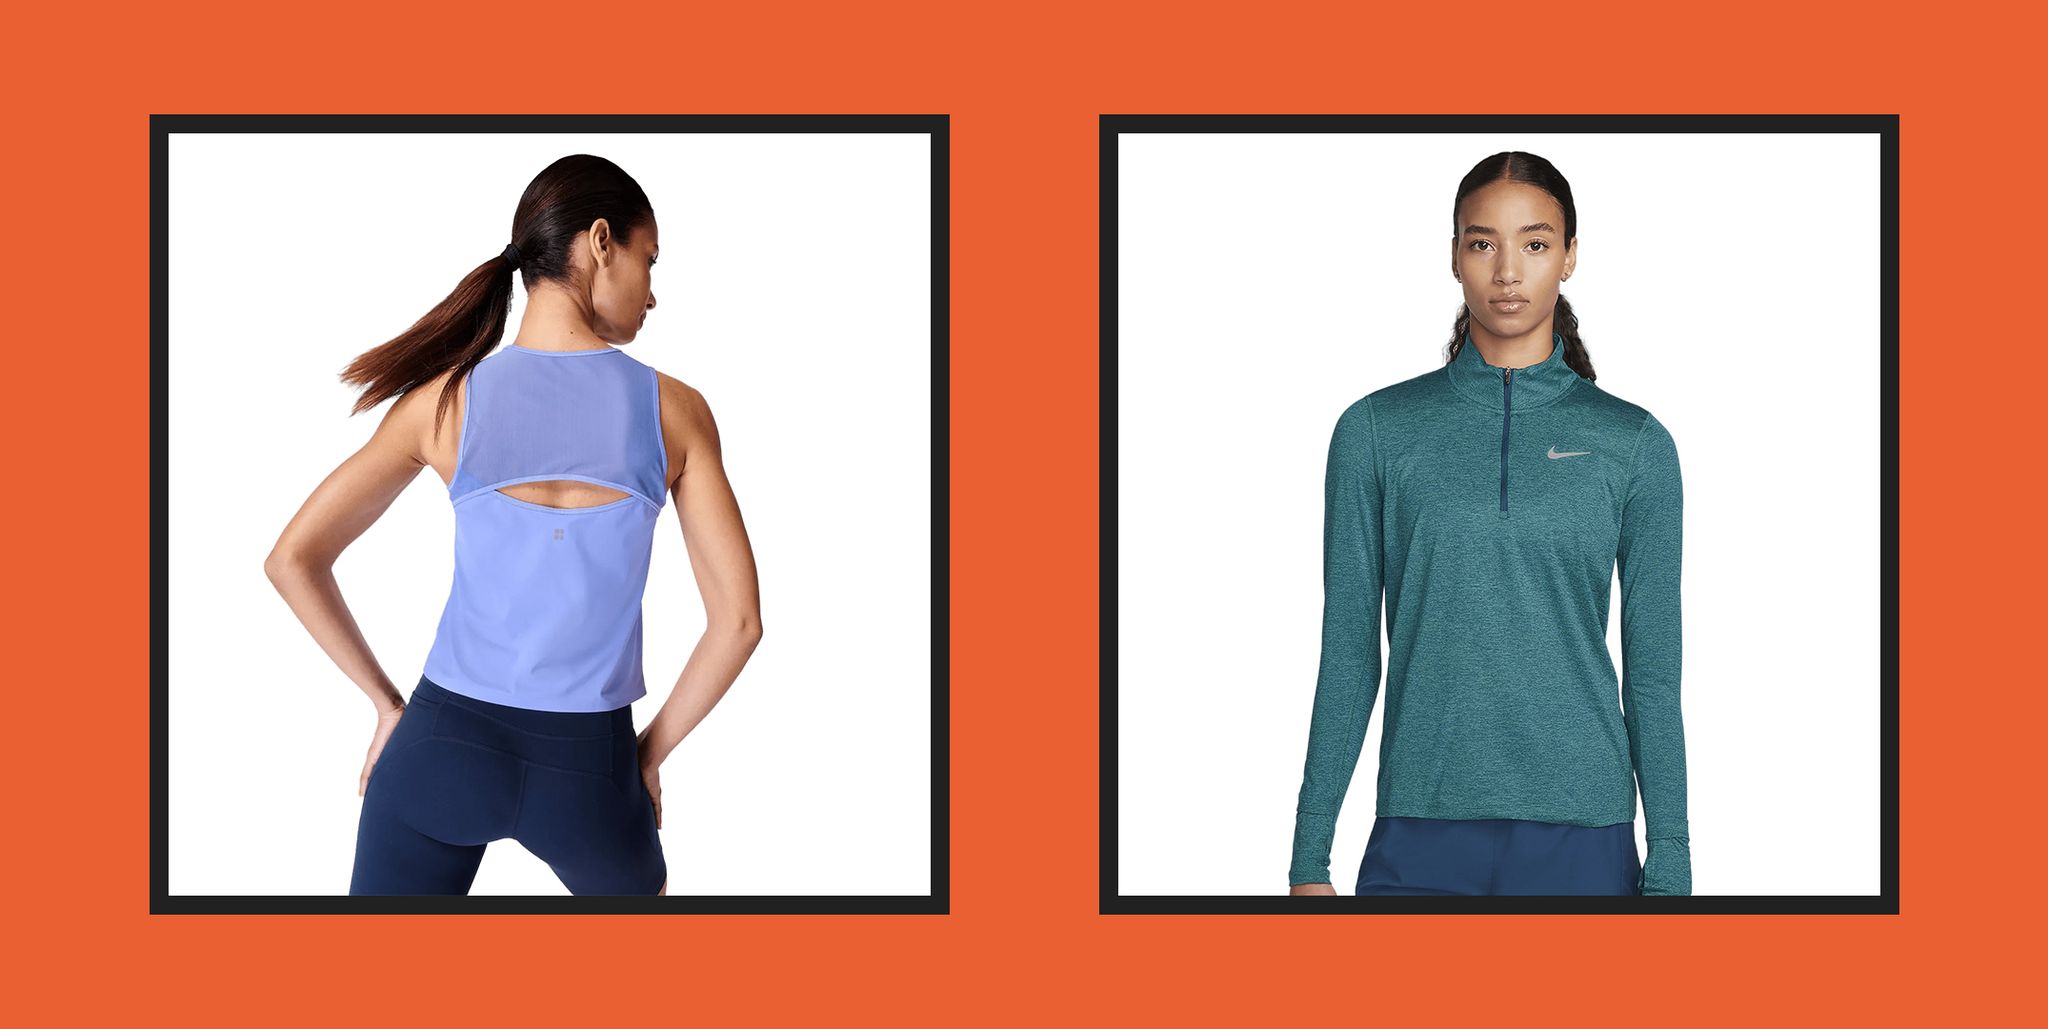 Nike One Classic Women's Dri-FIT Short-Sleeve Top